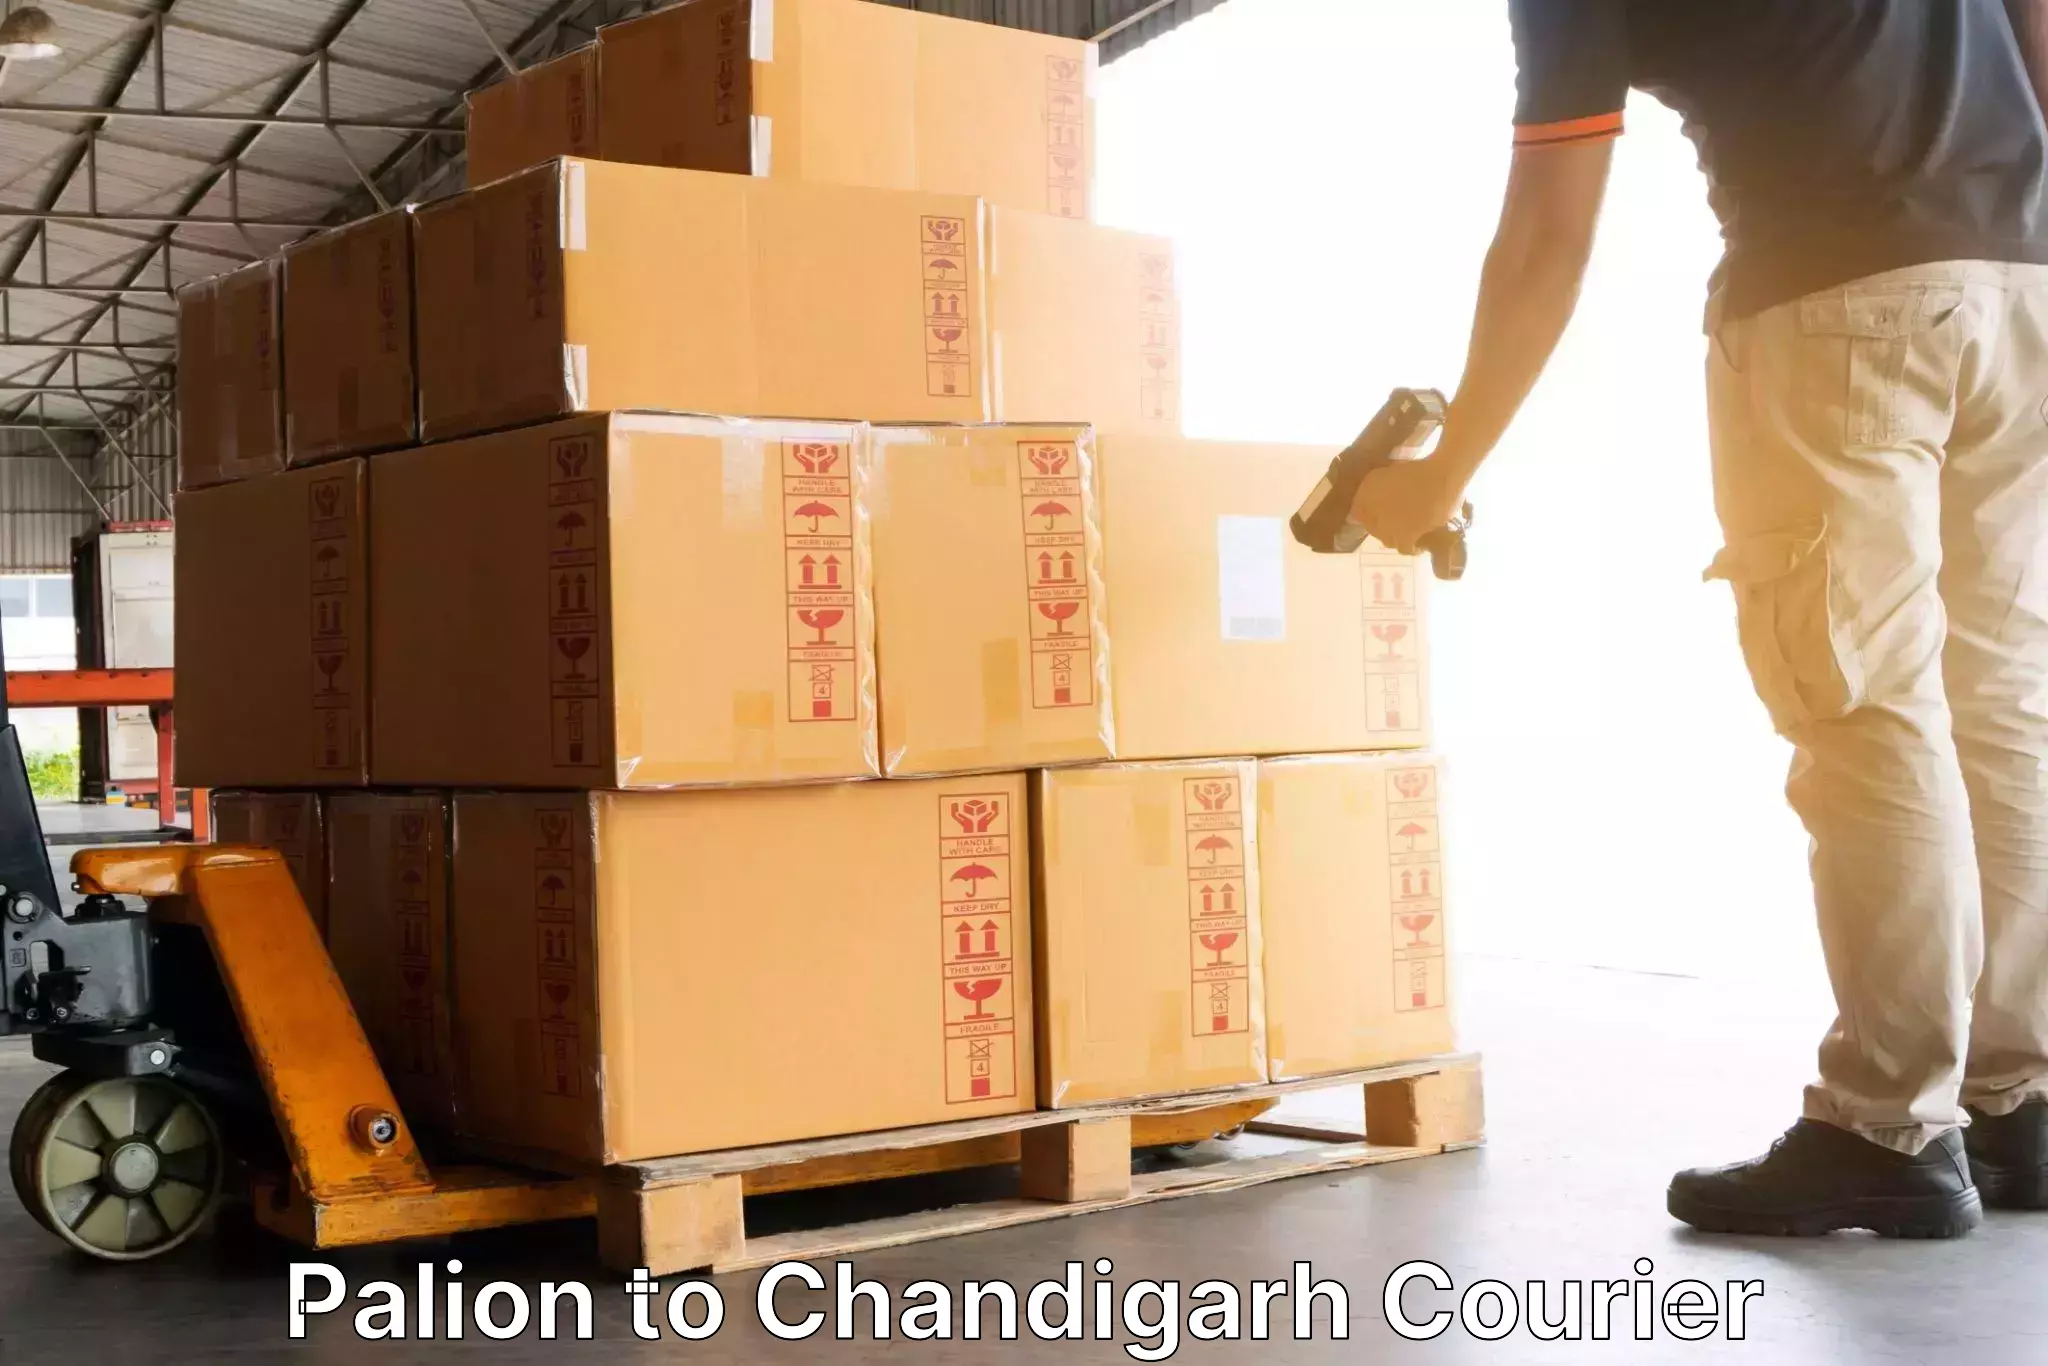 Courier service partnerships Palion to Panjab University Chandigarh